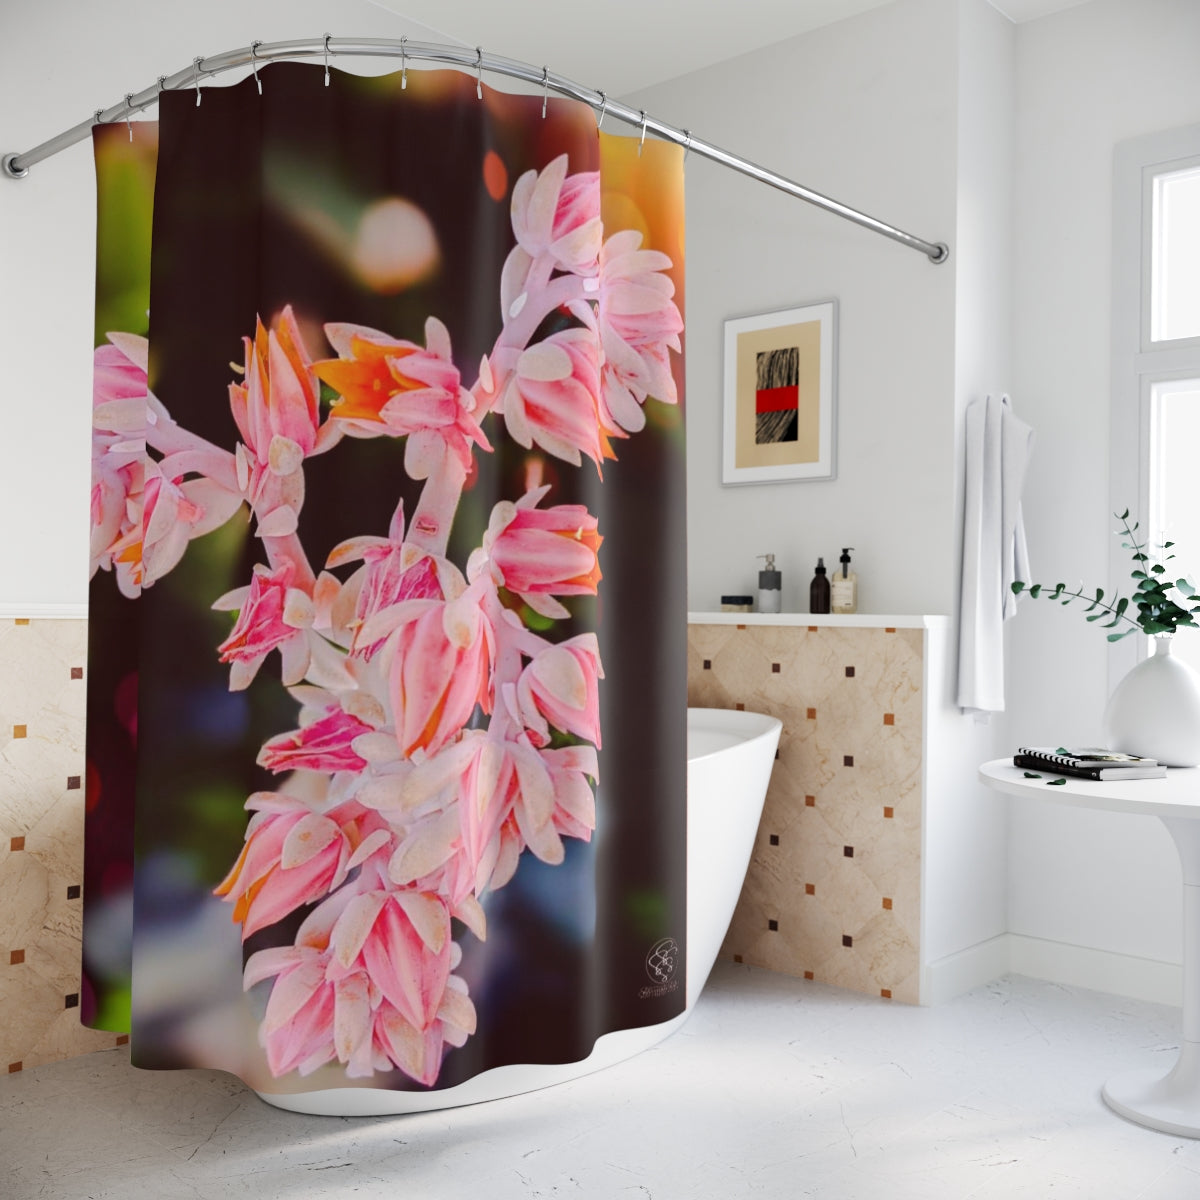 SSSS Psychedelic PinkOrange Shower Curtain